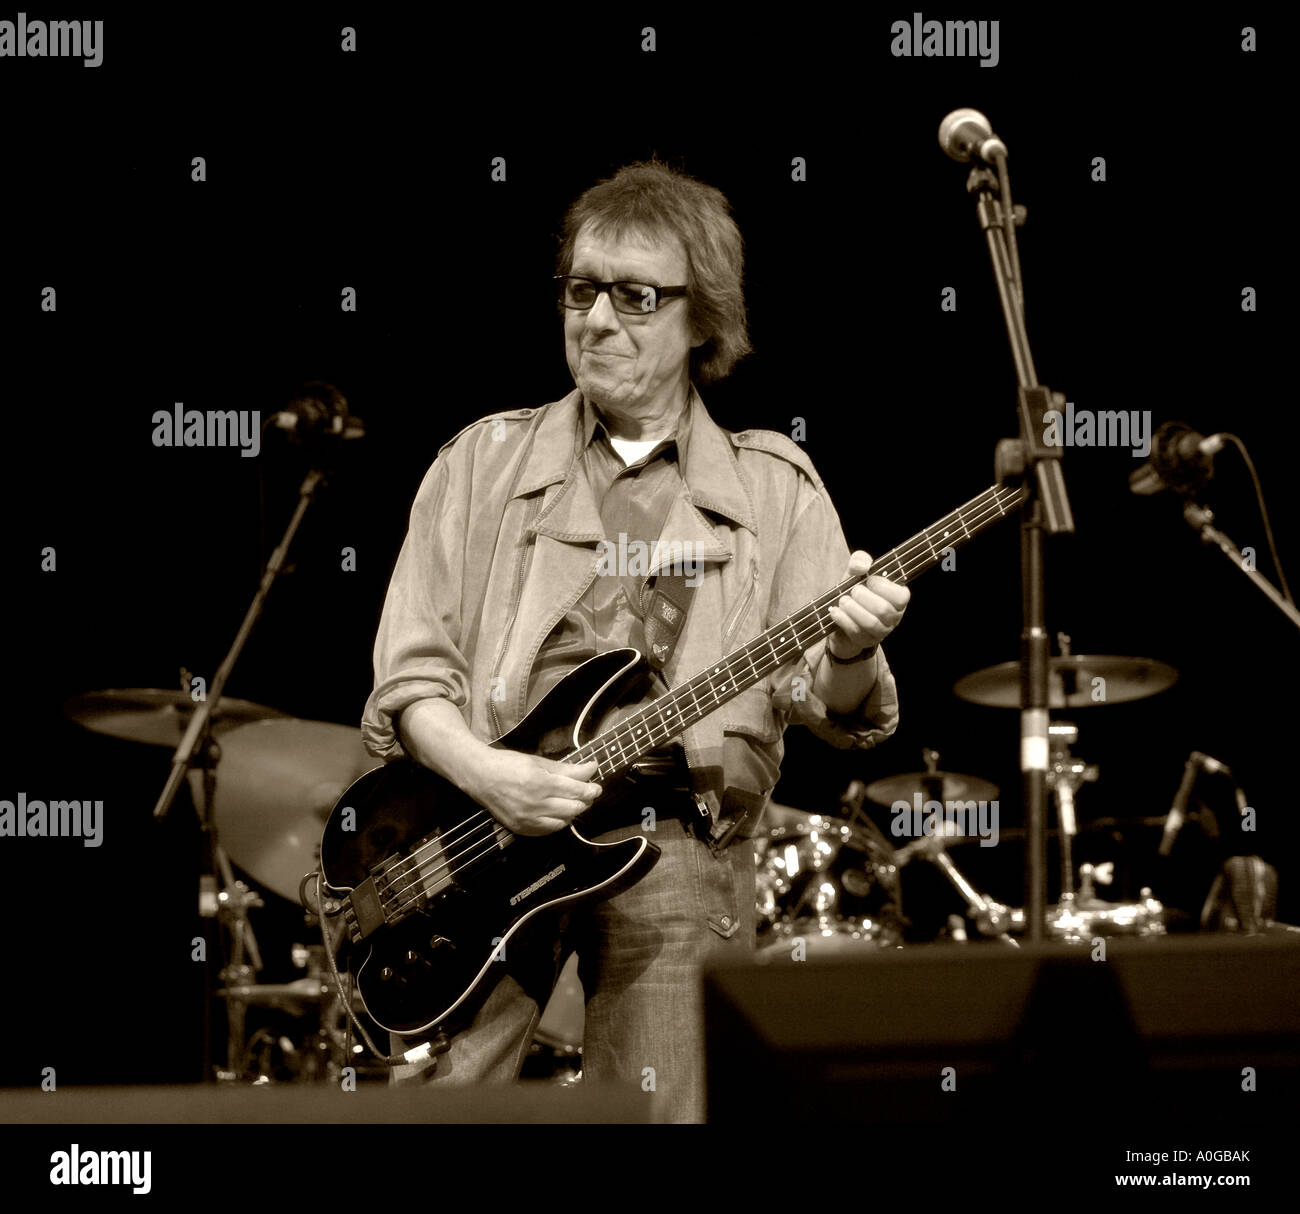 Bill Wyman giocando basso elettrico chitarra chitarrista Foto Stock